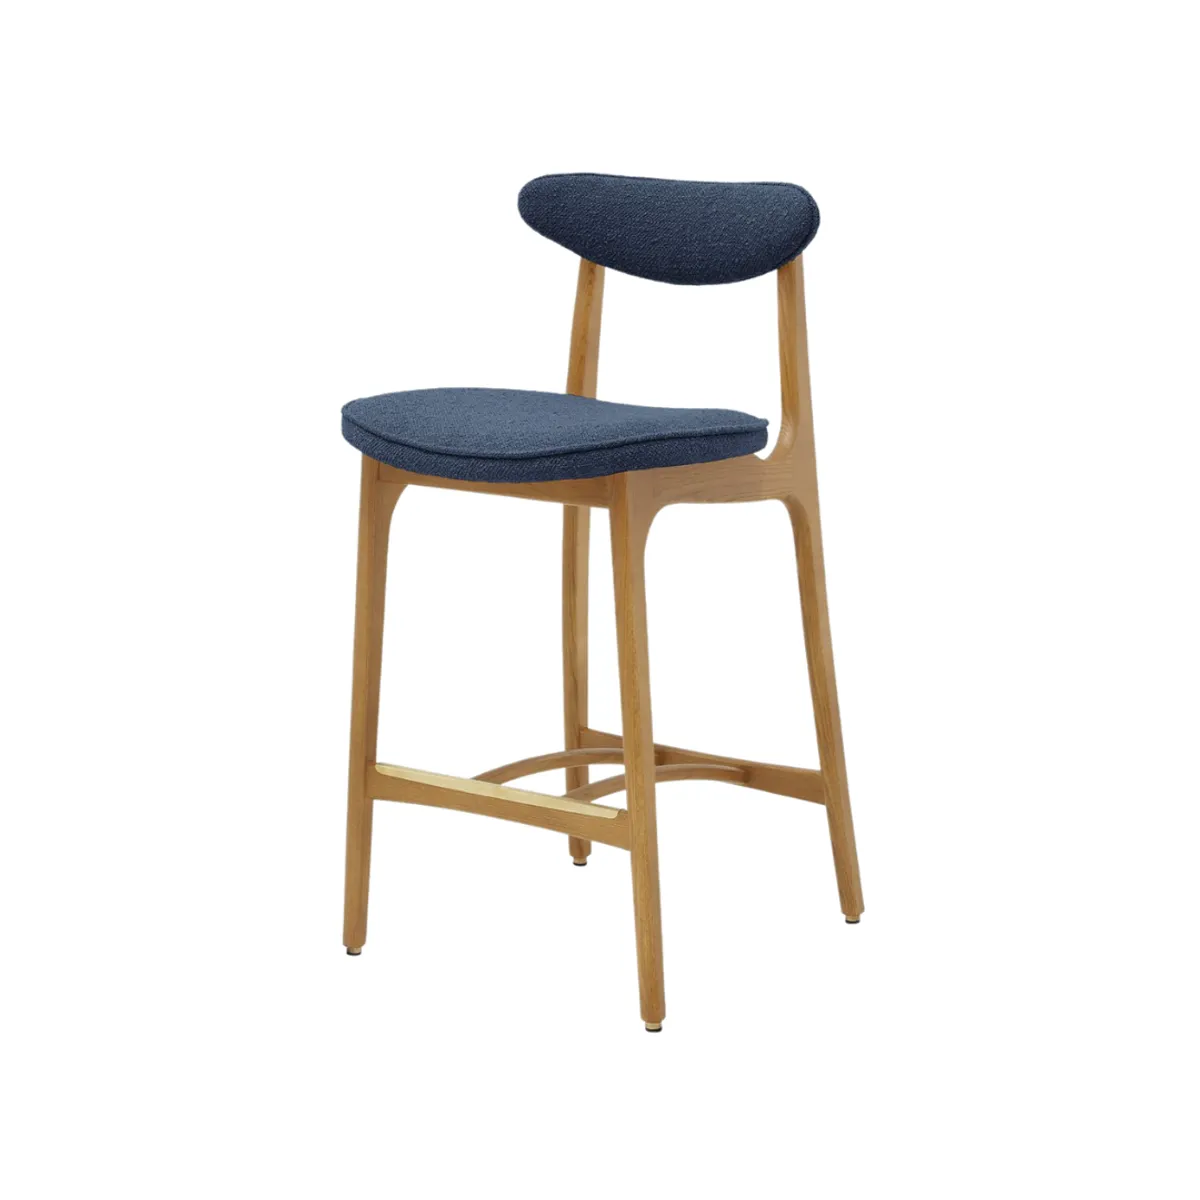 200-190 bar stool 1